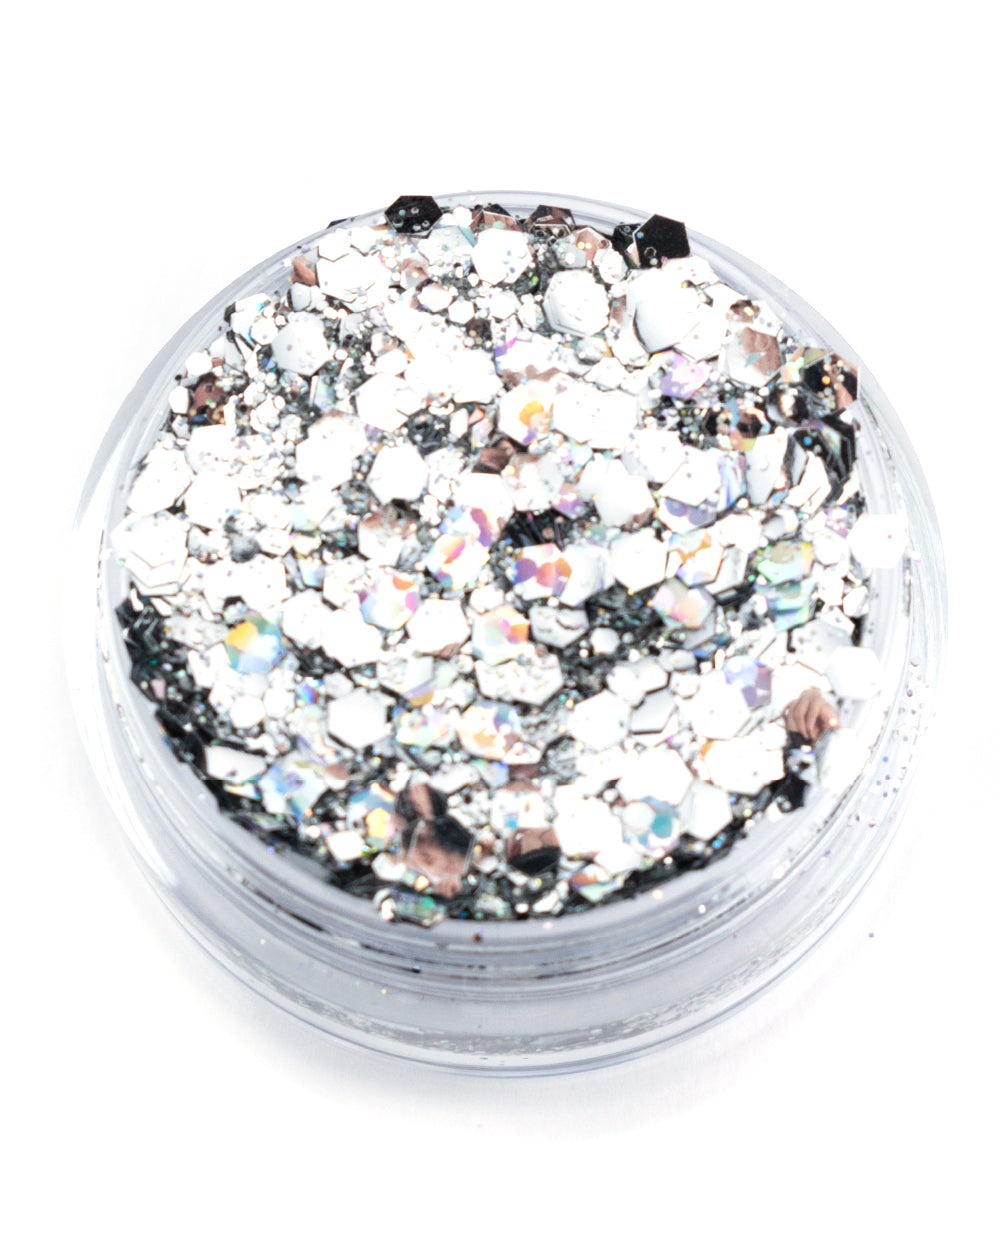 Mykonos Eco Glitter - Lunautics Eco Glitter